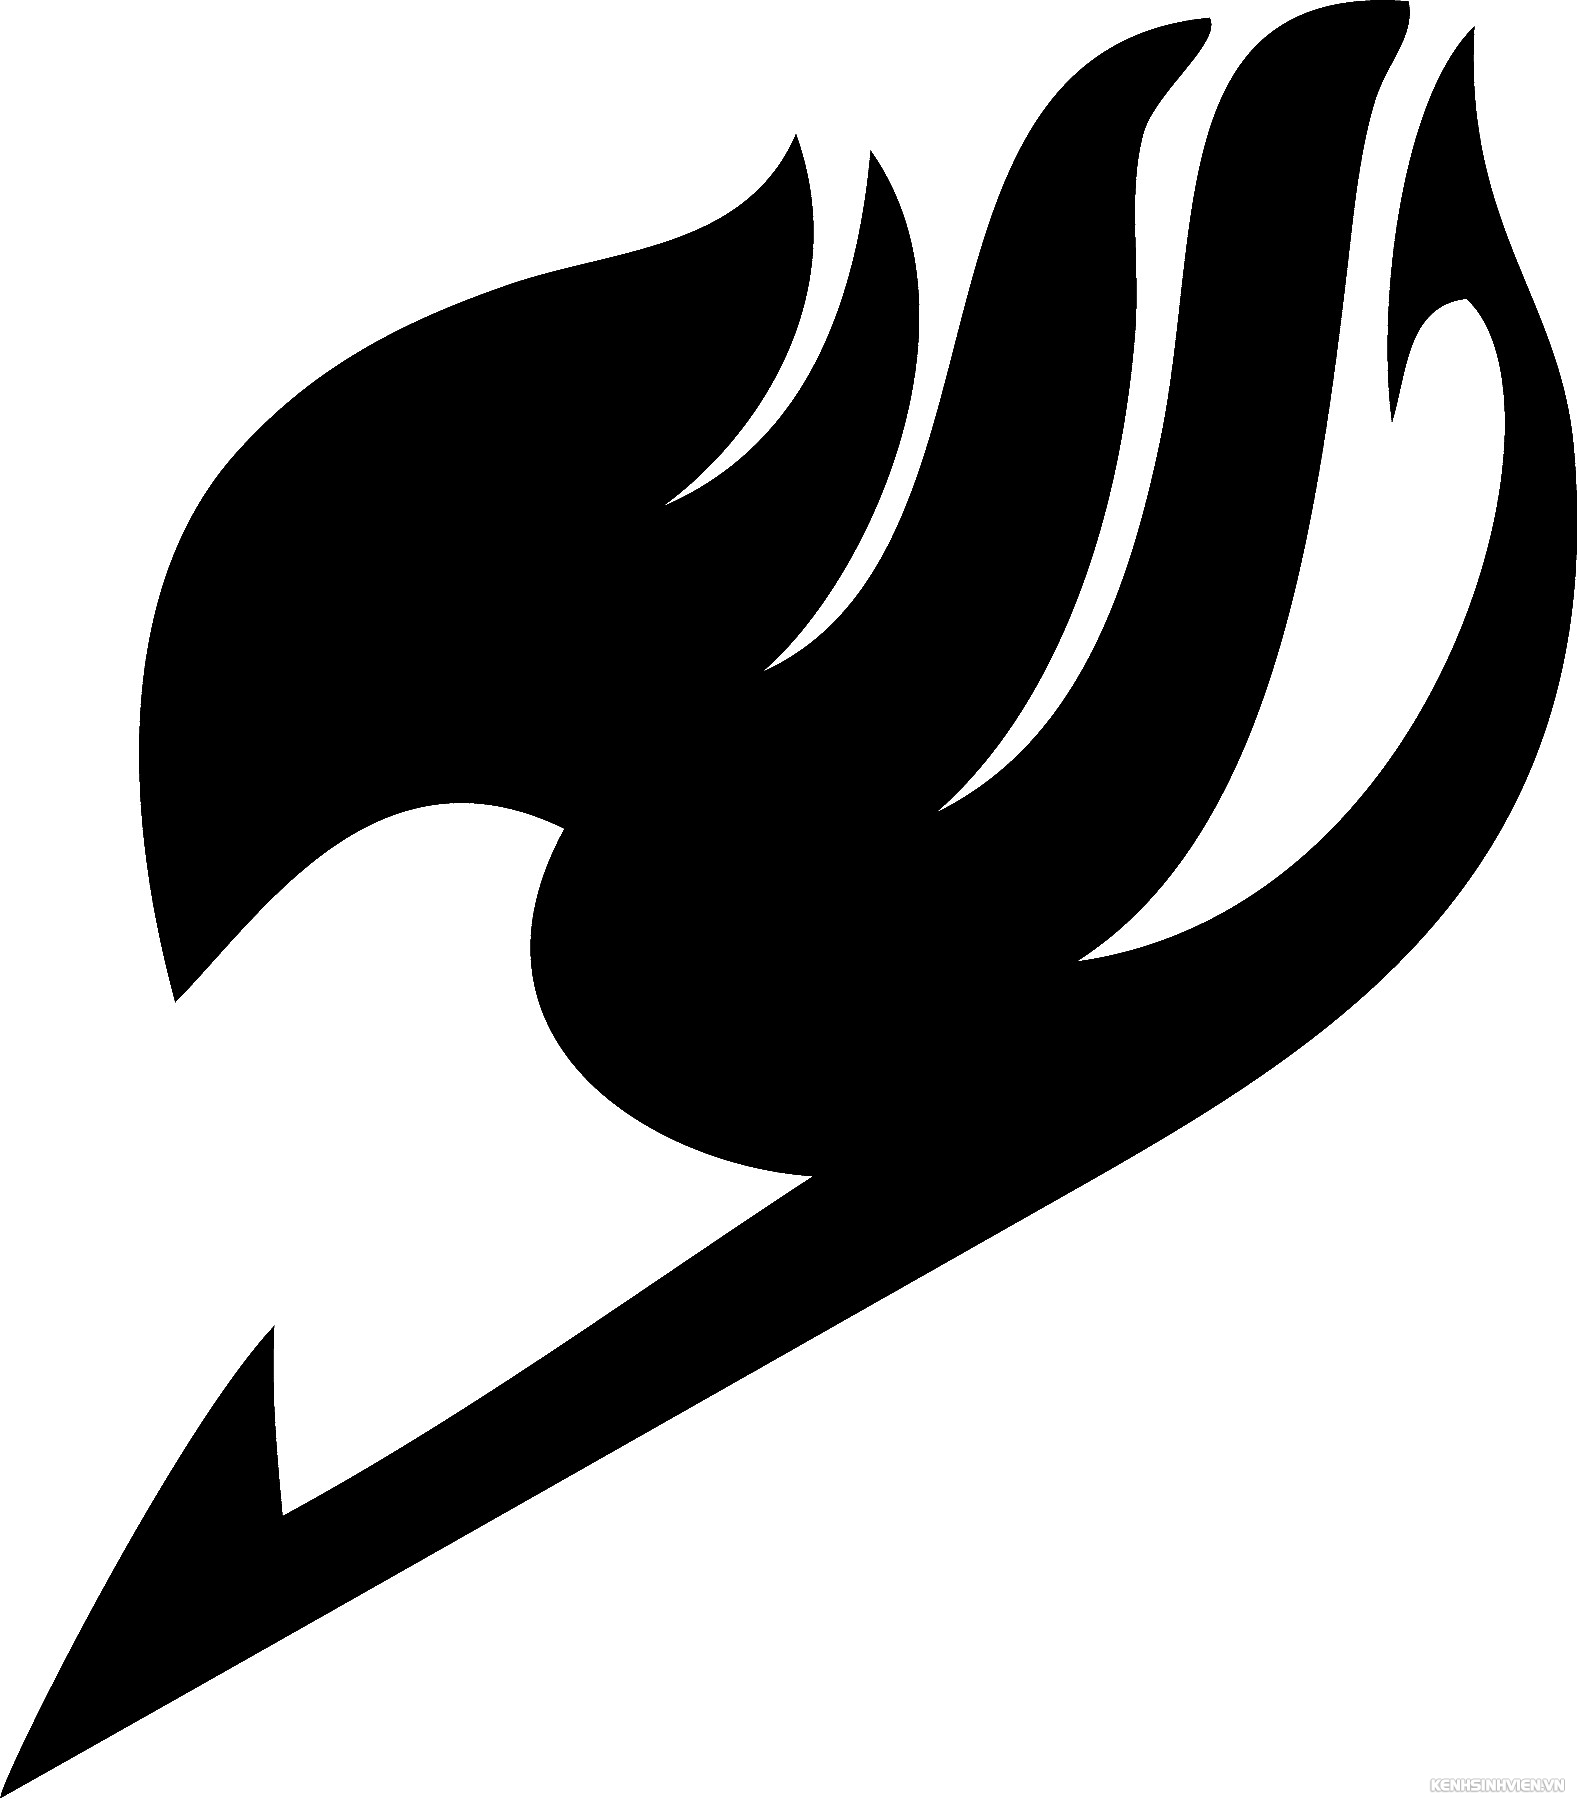 fairy-tail-logo.jpg